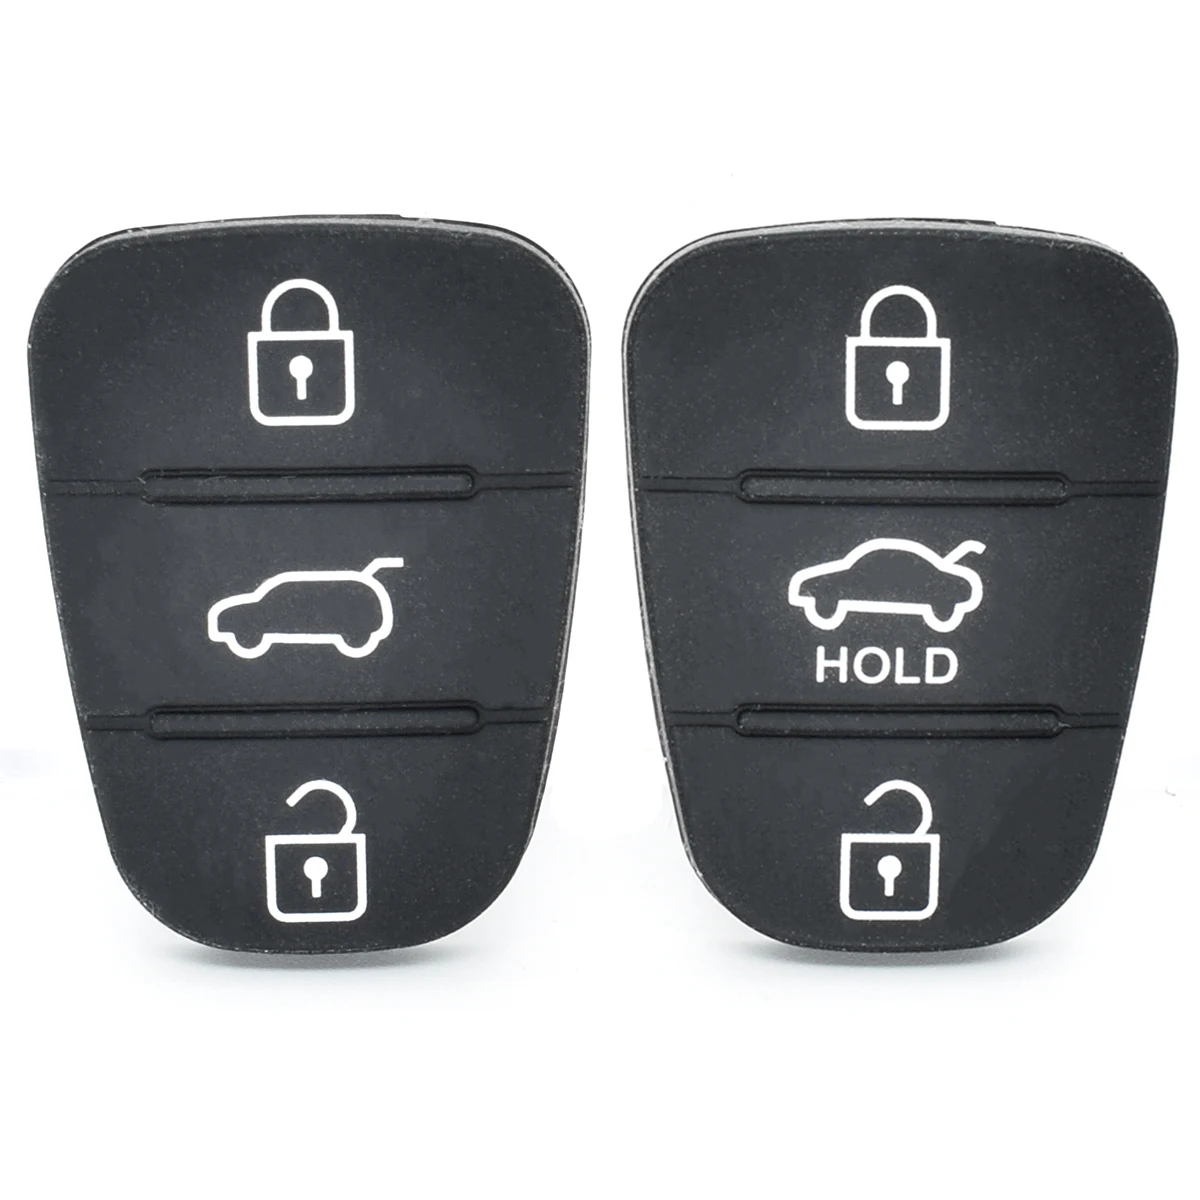 

3 Button Remote Car Key Shell Fob Rubber Pad For Hyundai Solaris Accent Tucson l10 l20 l30 IX35 Kia K2 K5 Rio Ceed Flip Key Case